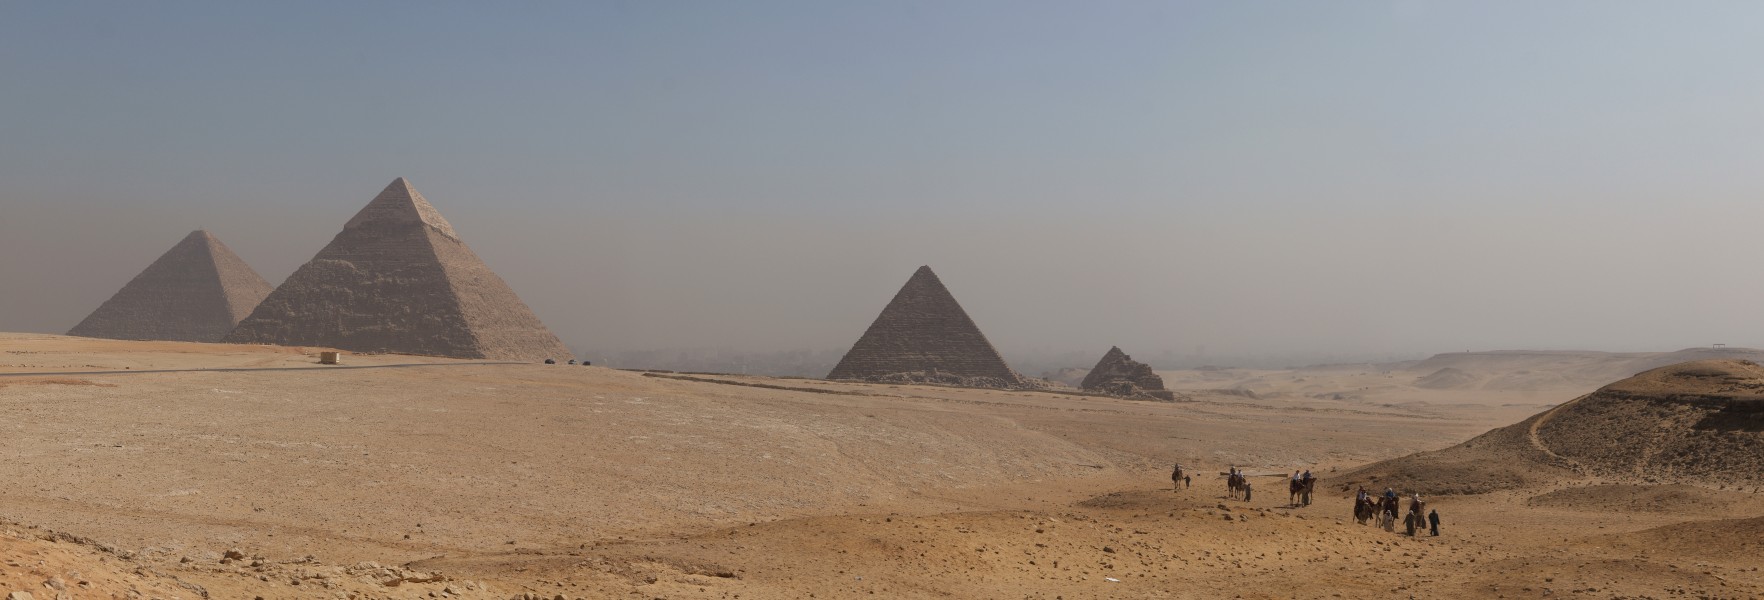 All pyramids of Giza panorama 2